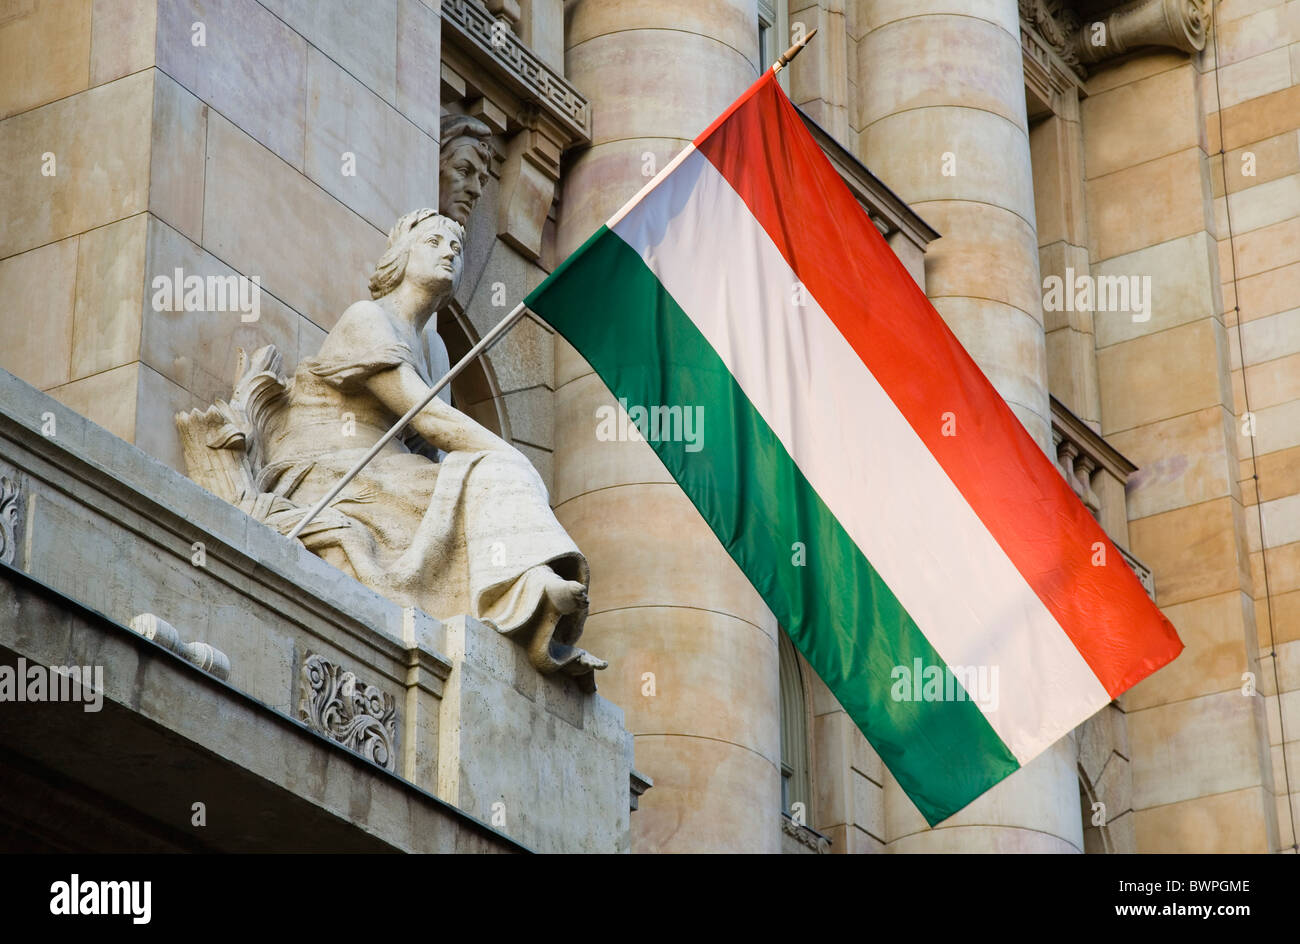 HUNGARY Pest County Budapest Stock Photo